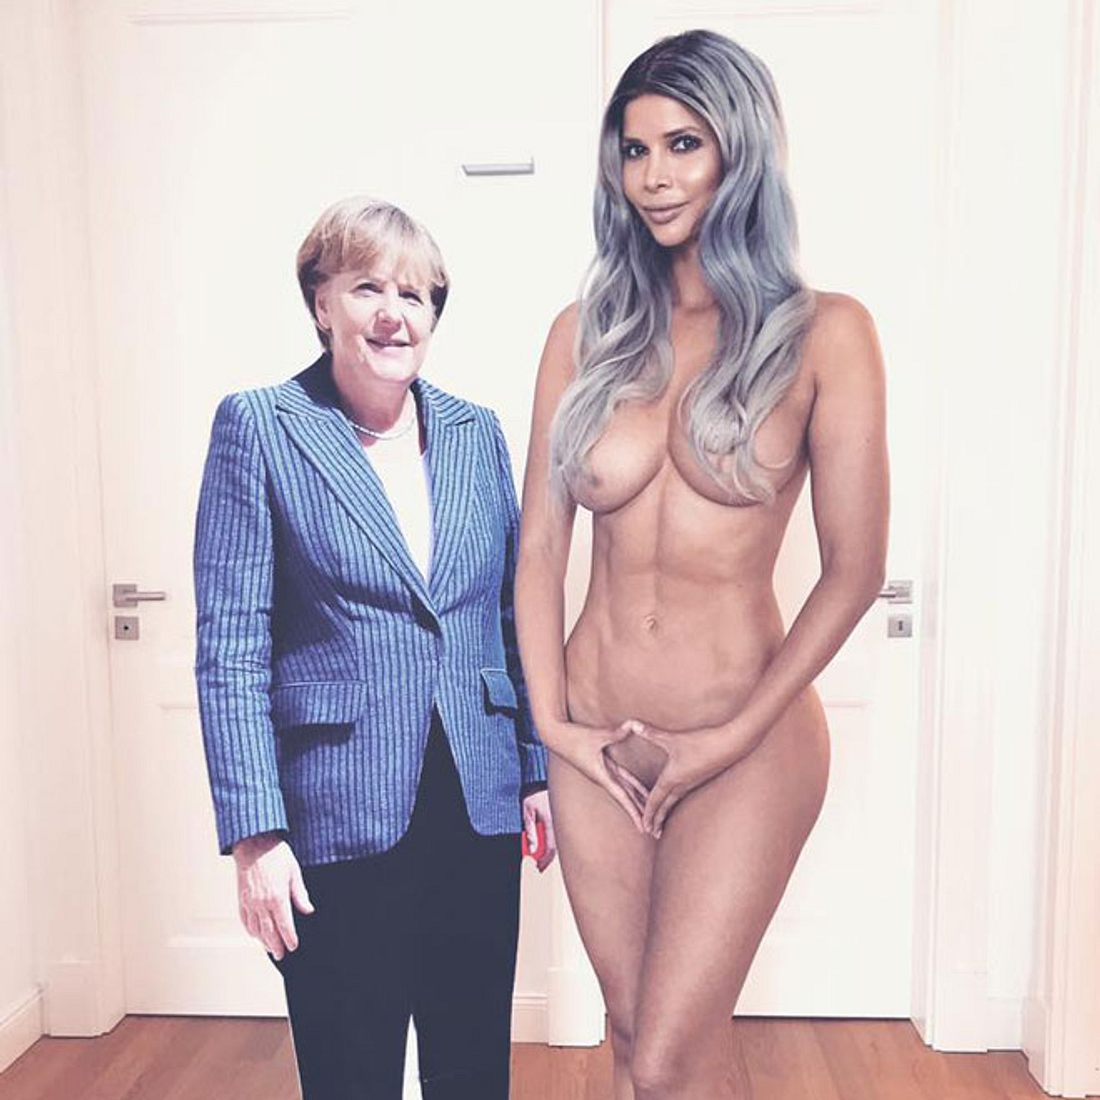 Nackt merkel angela Angela Merkel